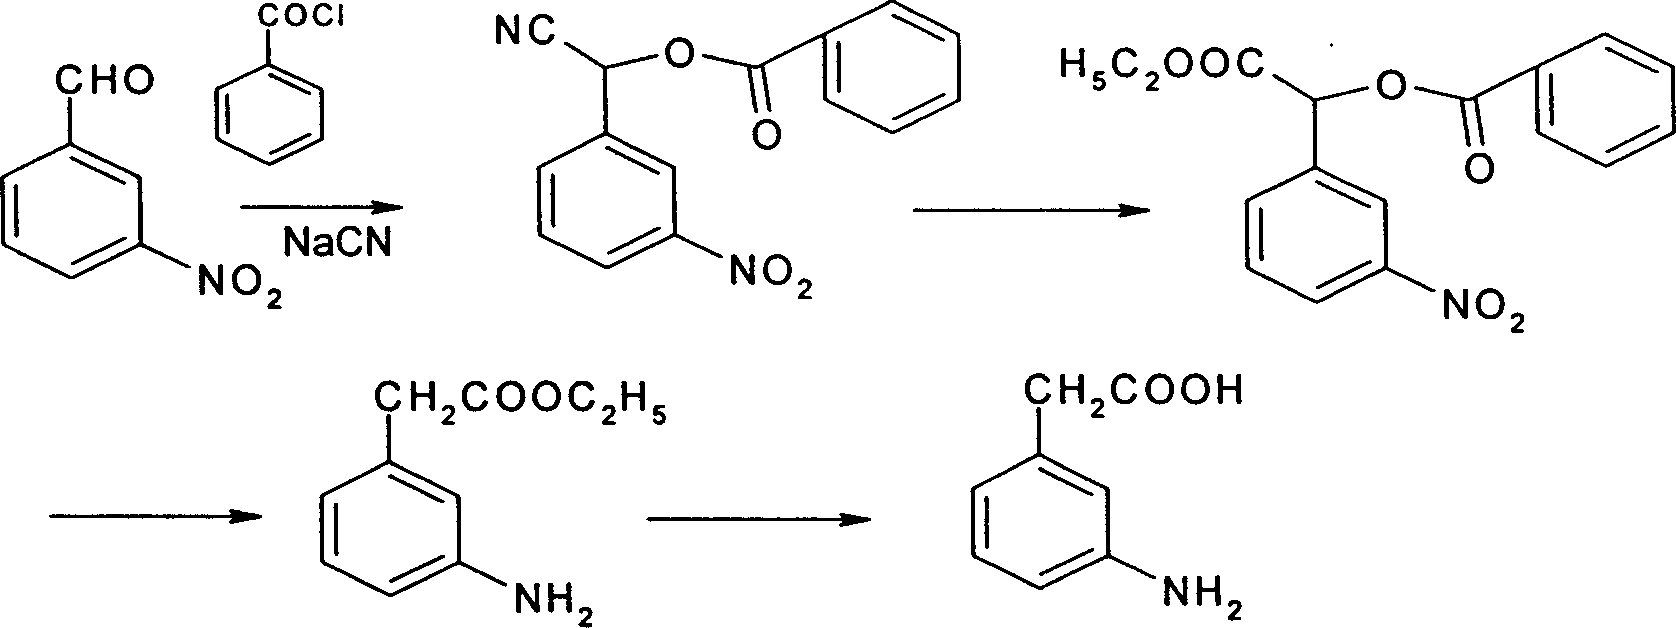 Industrial preparation method for 3-amino phenylacetic acid